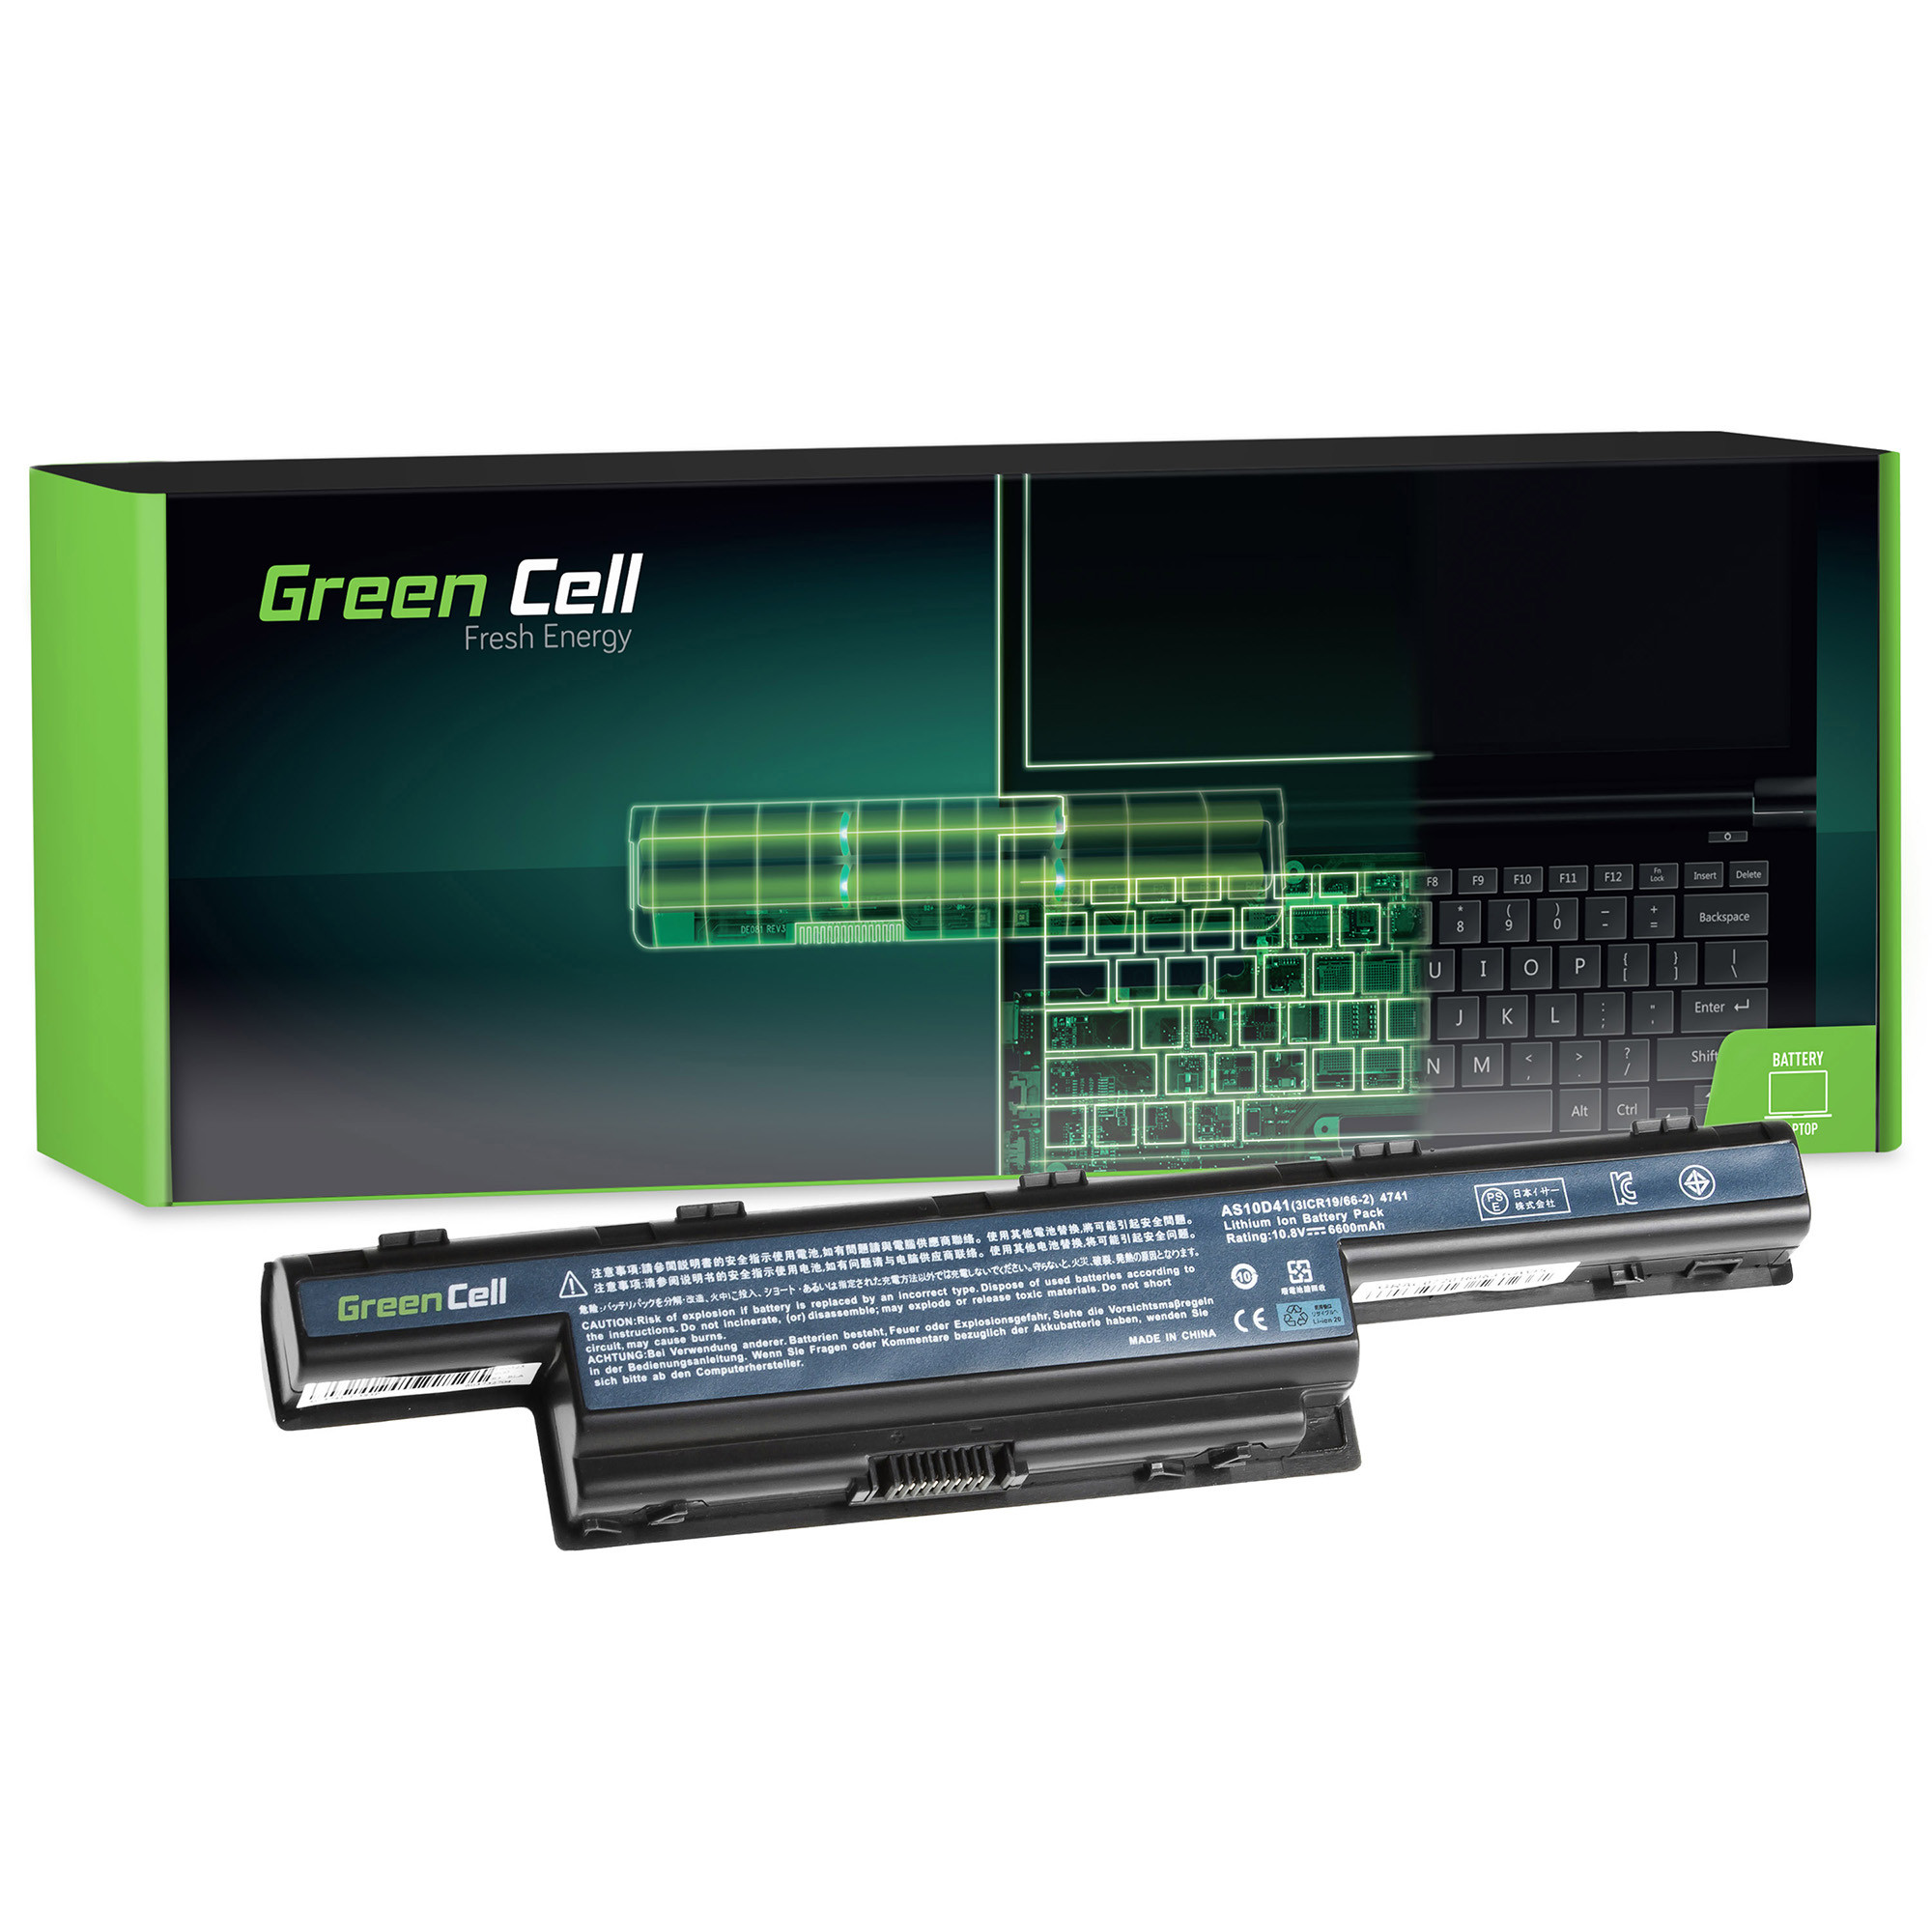 *Green Cell AC07 Baterie Acer AS10D31/AS10D3E/AS10D41/AS10D51/AS10D56/AS10D61/AS10D71 6600 mAh Li-ion